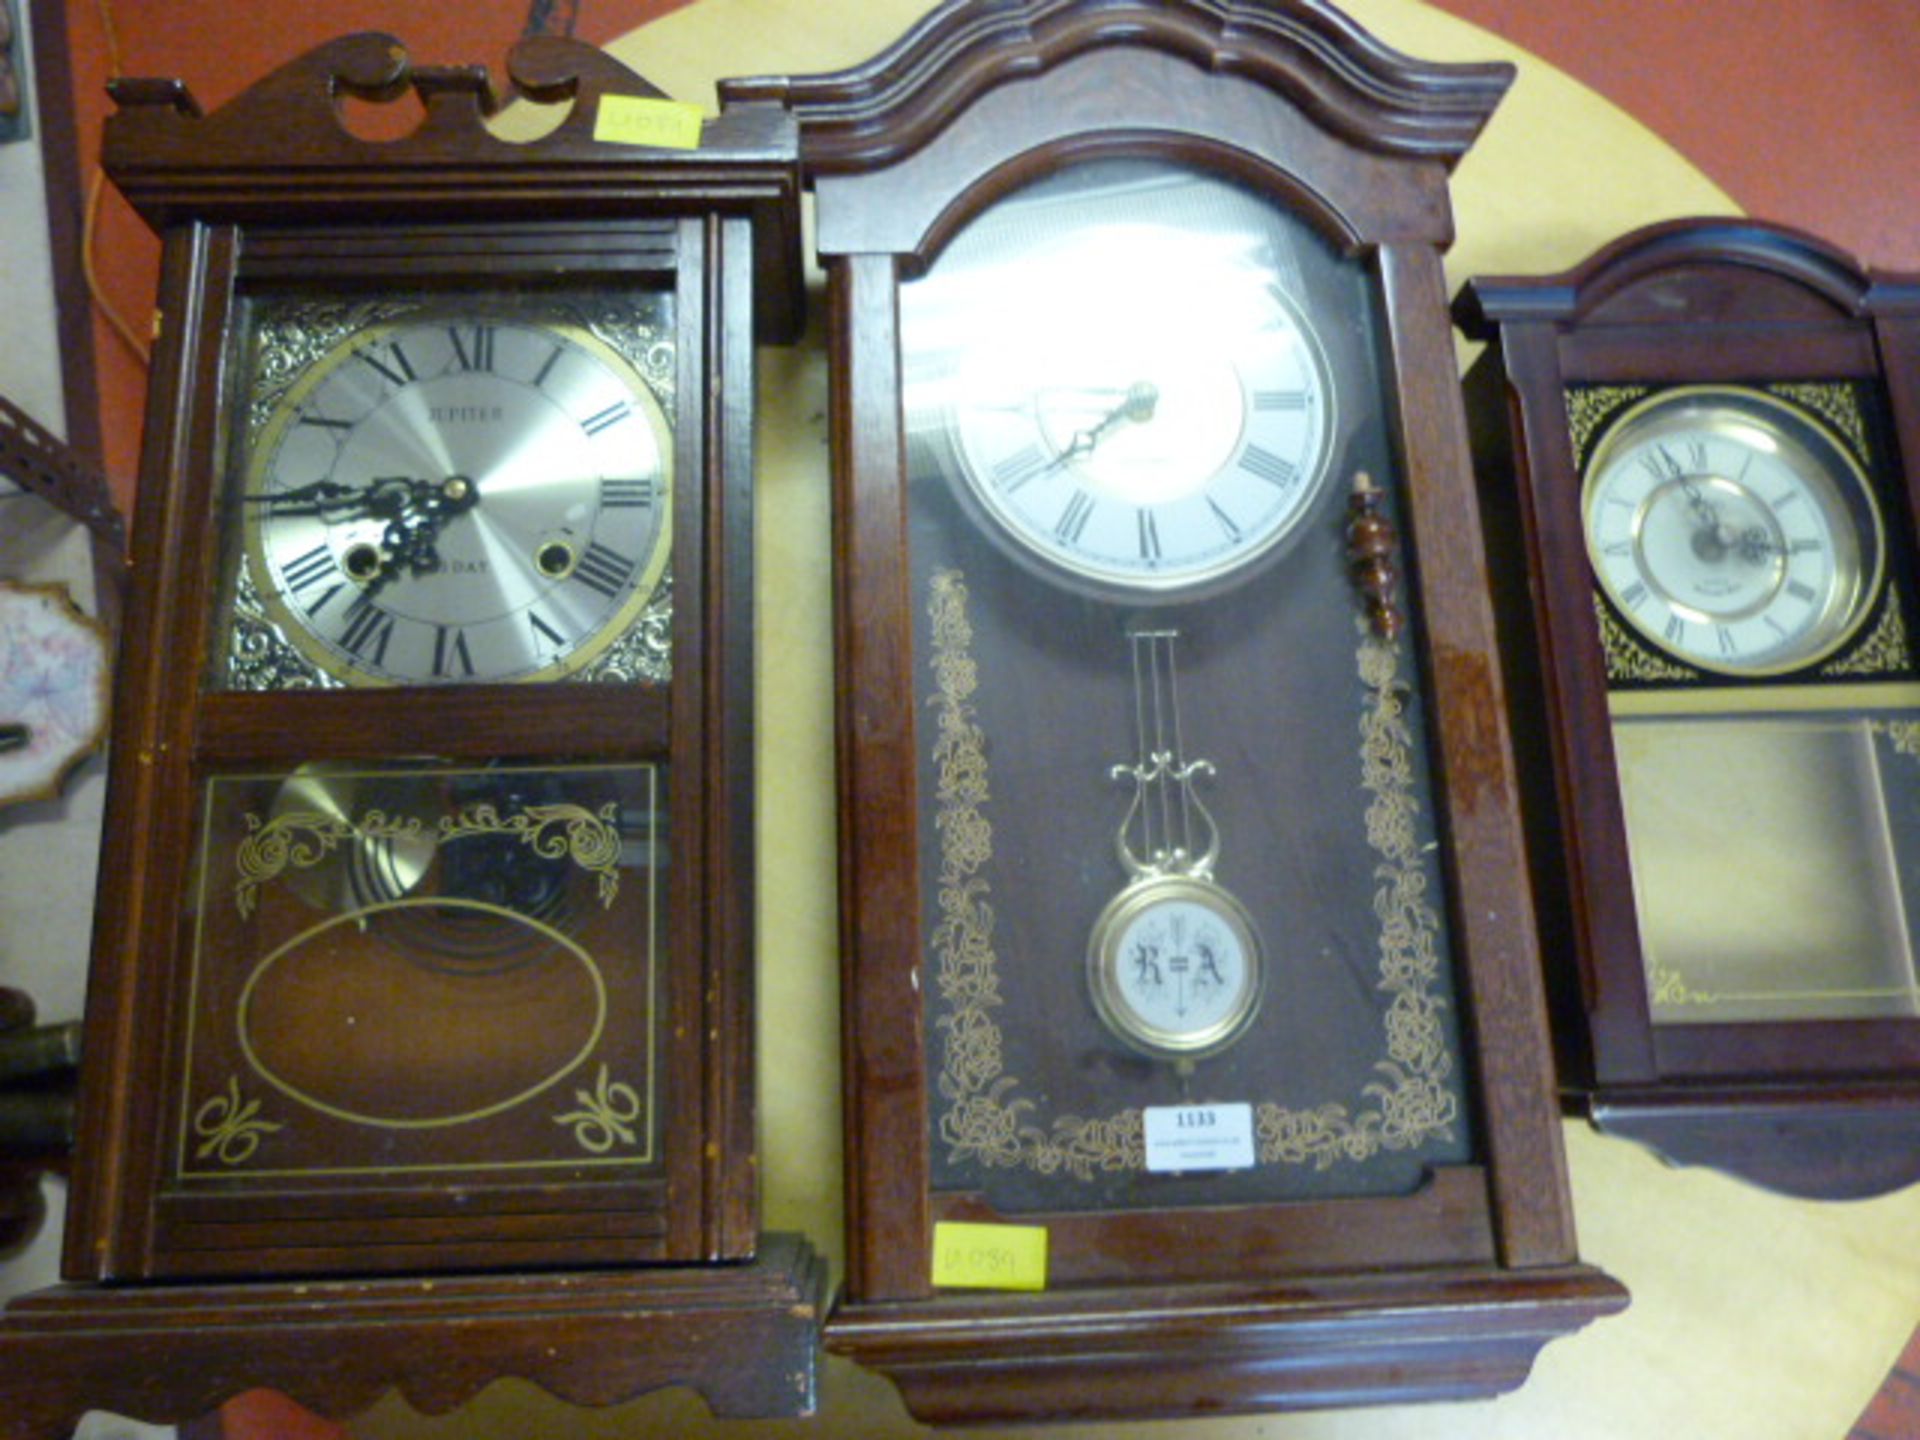 Reproduction Mantel Clock and Two Reproduction Wall Clocks